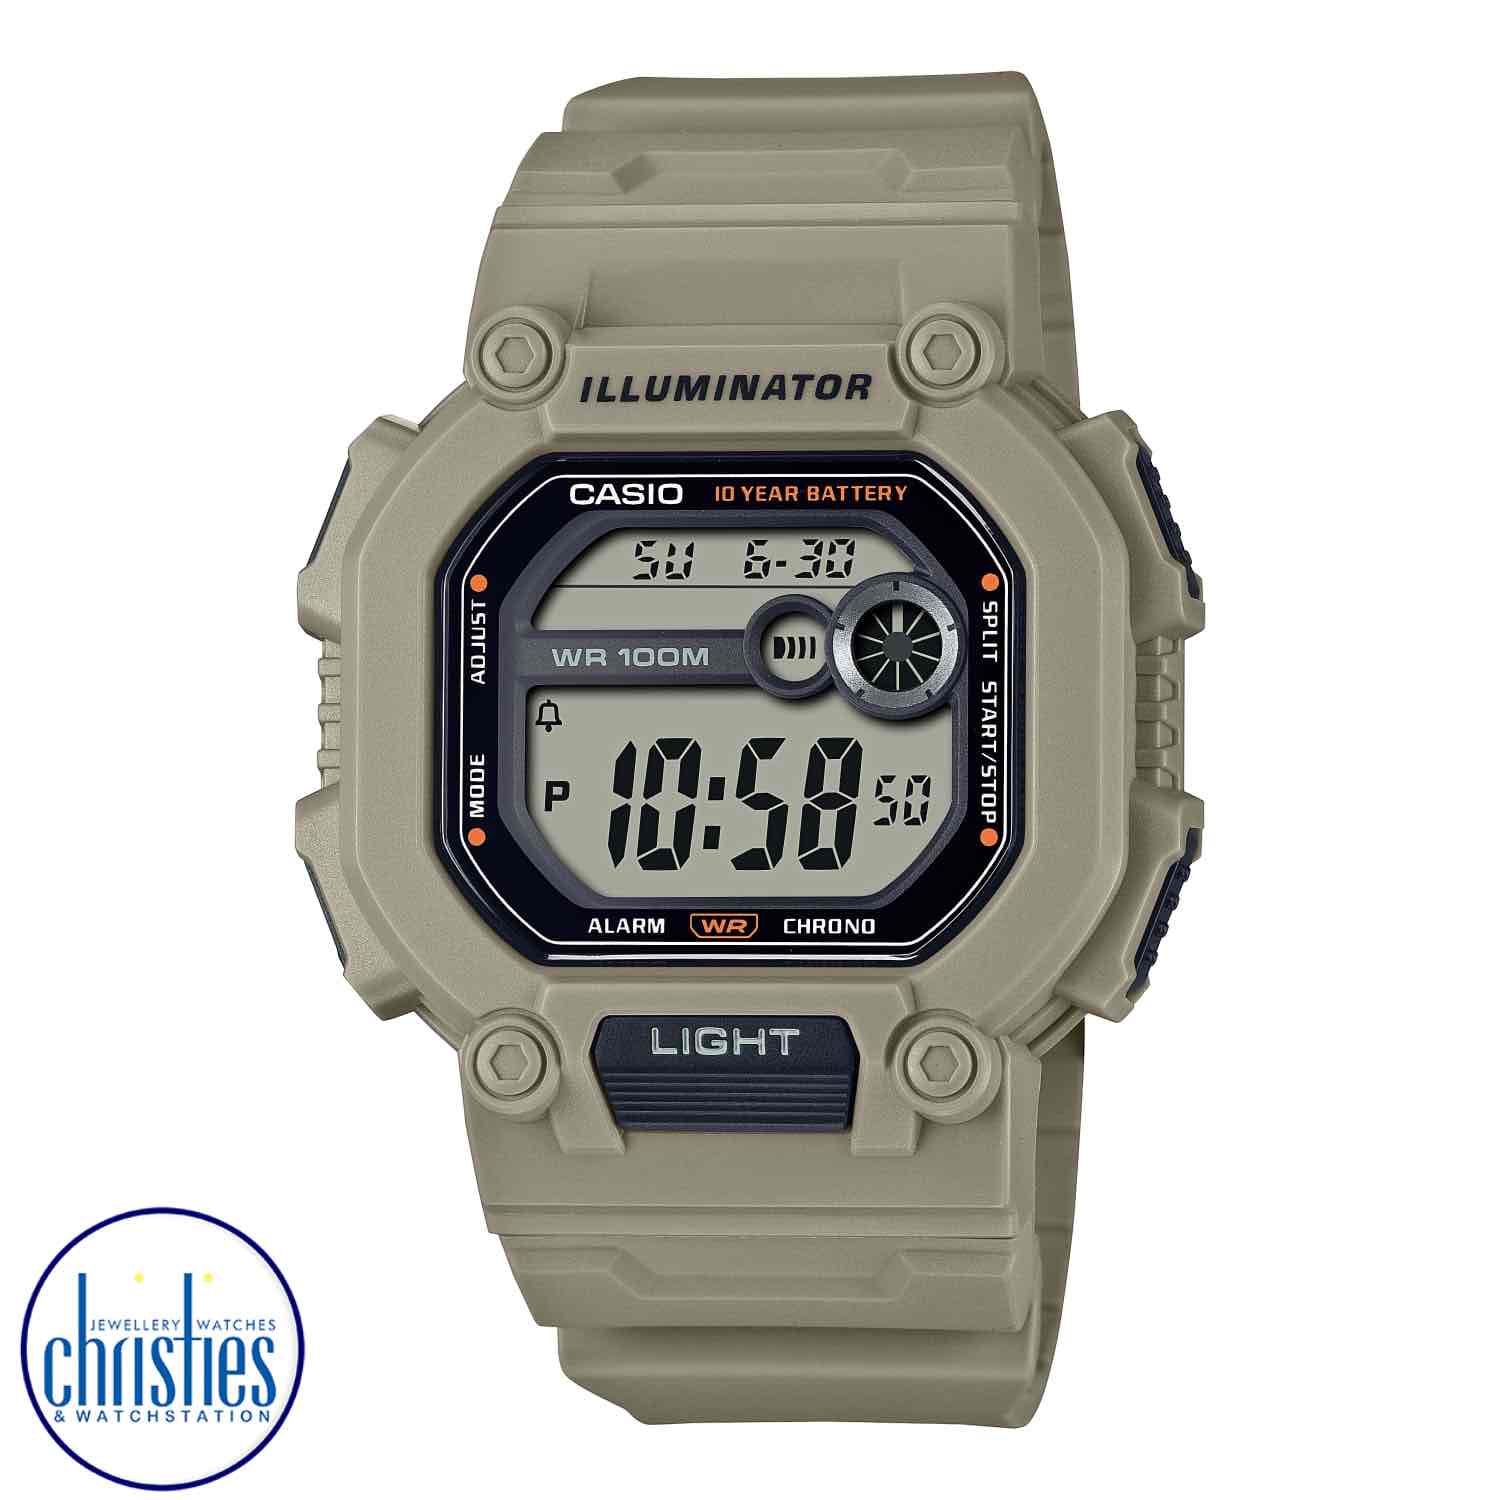 W737H-5A Casio 10 Year Battery Watch cheap casio watches nz